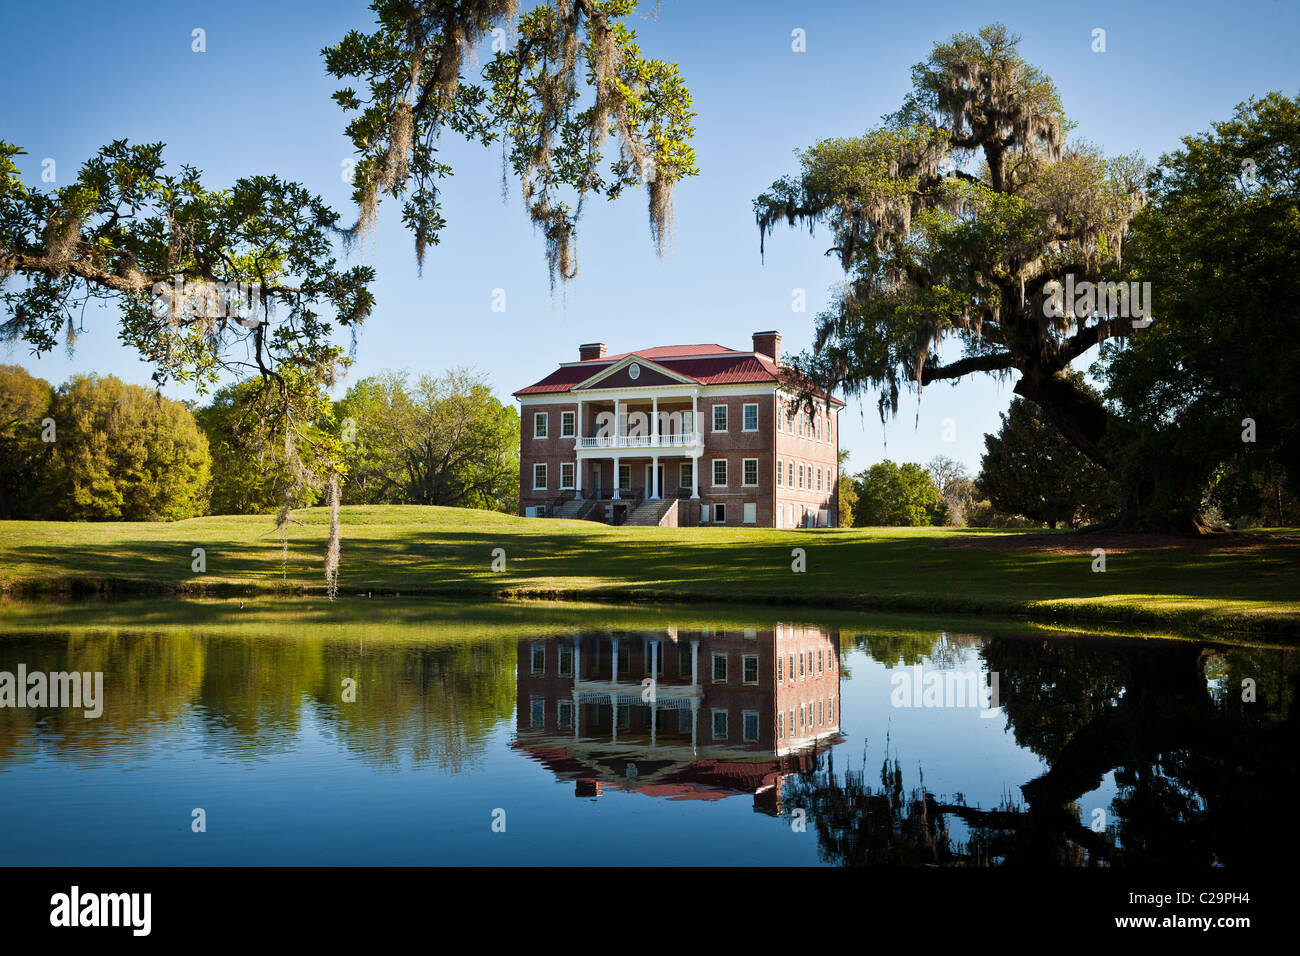 Drayton Hall Plantation in Charleston, SC. Palladian style estate built by John Drayton in 1738. Stock Photo